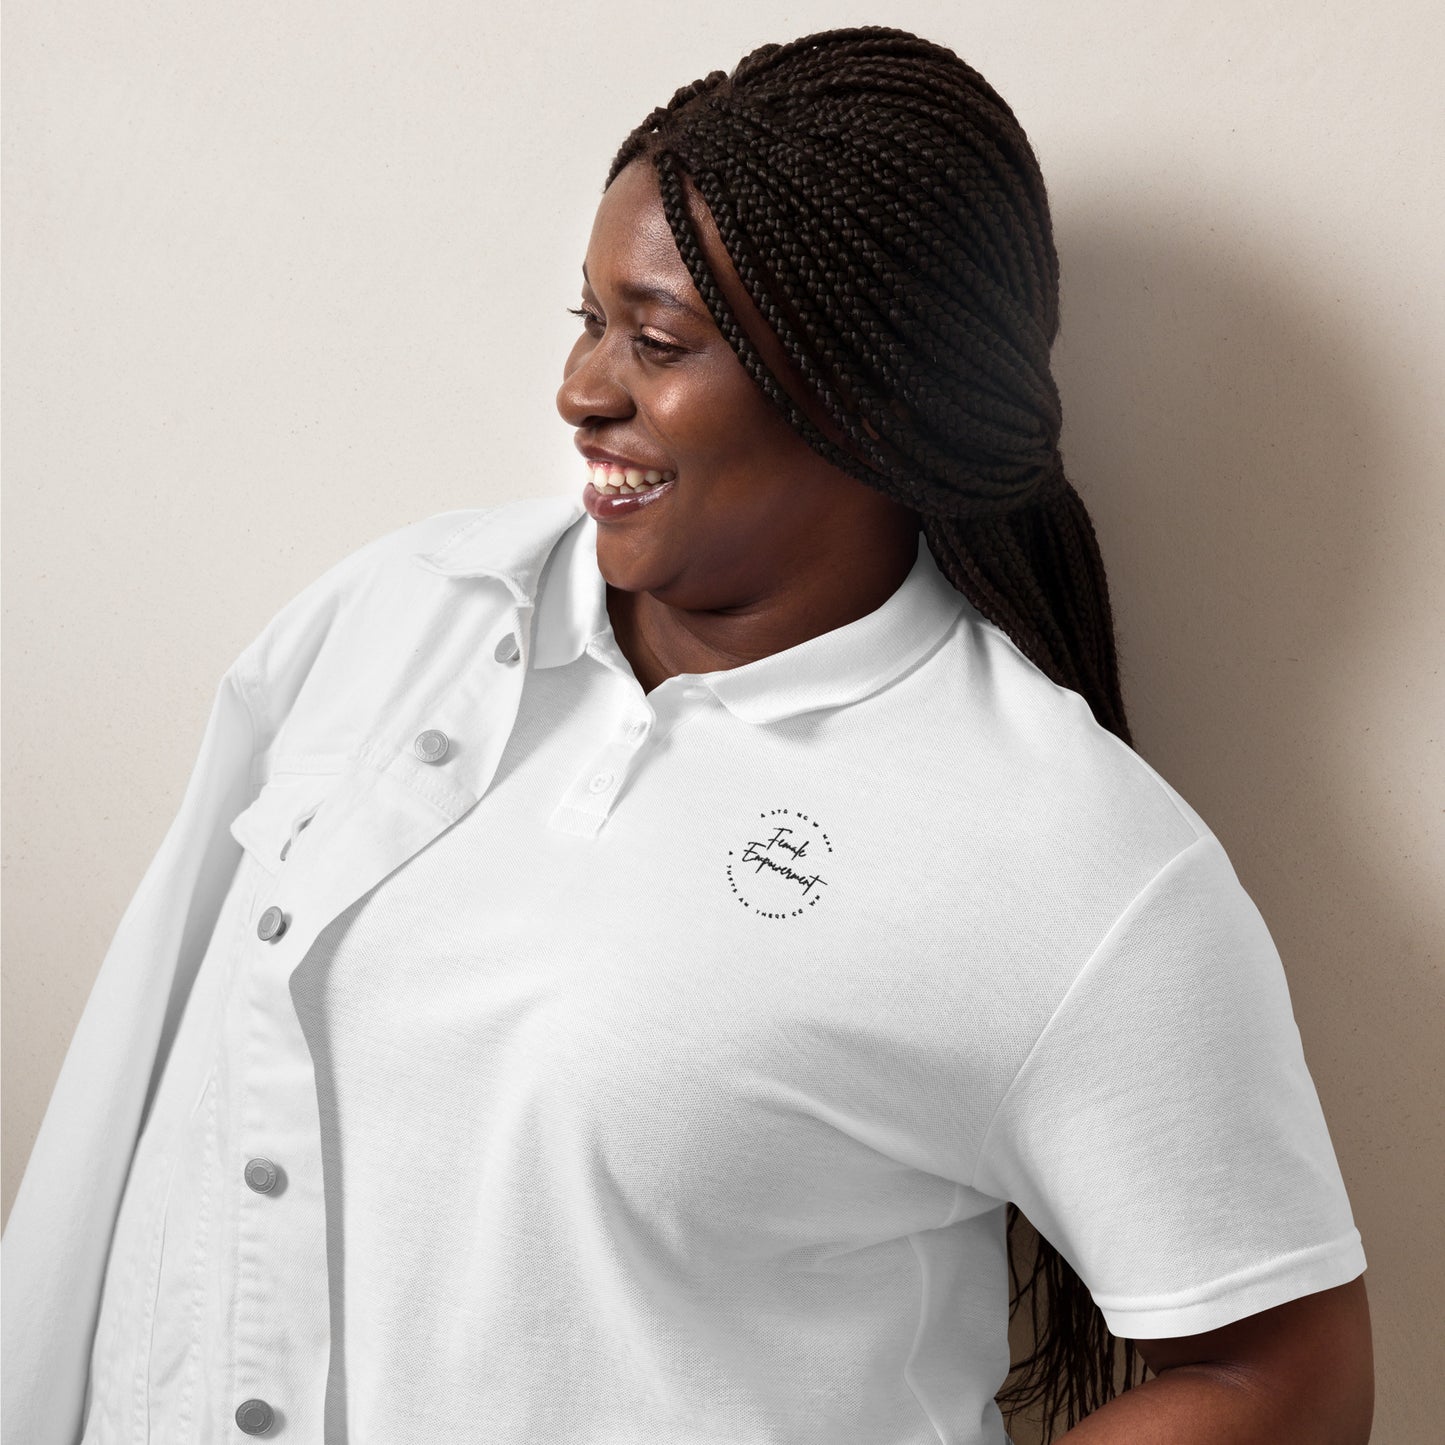 Women’s pique polo shirt - Female Empowerment Polo Shirt Stylin' Spirit White S 